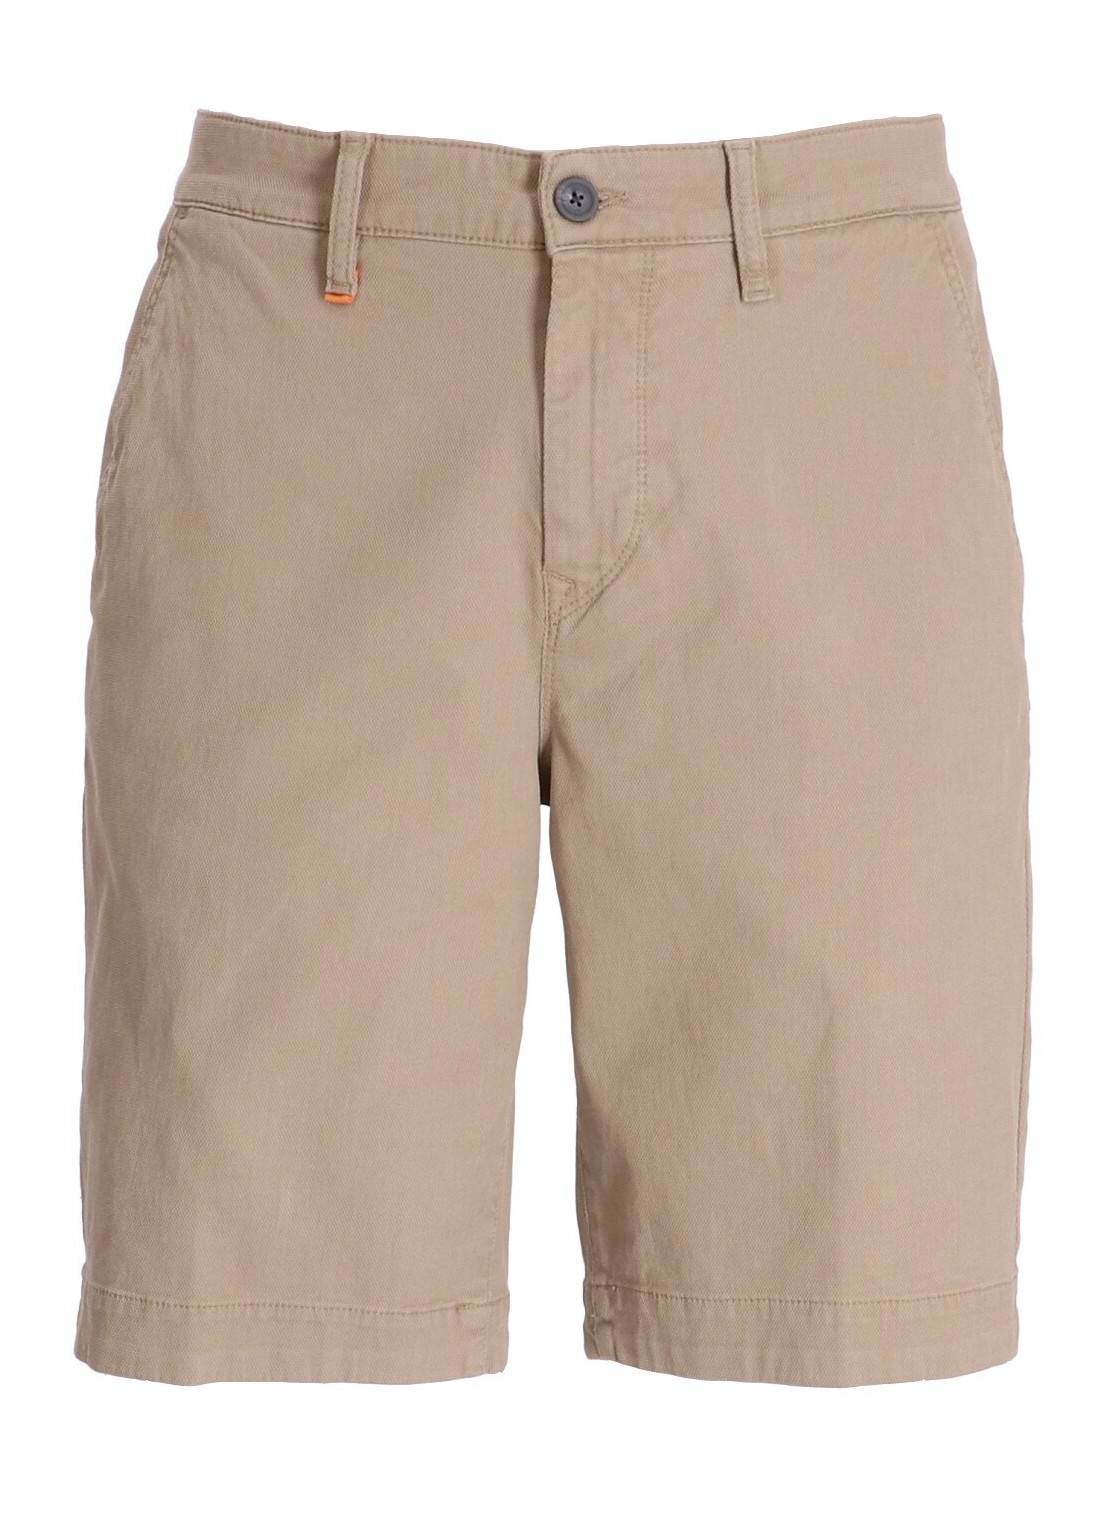 Pantalon corto boss short pant man schino-taber-shorts 50491698 263 talla beige
 